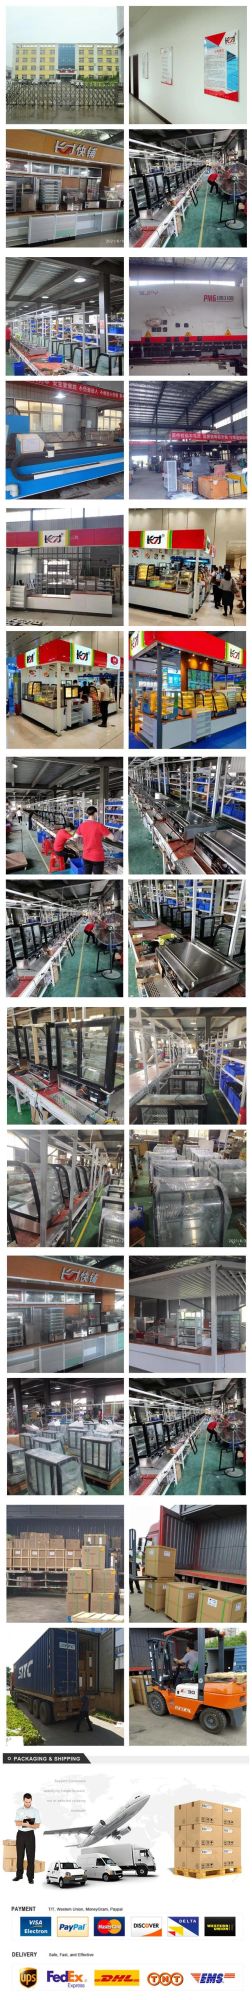 Ksj-10-Yd Wheels Moveable Potato Corn Baking Equipment Oven Baker Food Shop China Factory Price